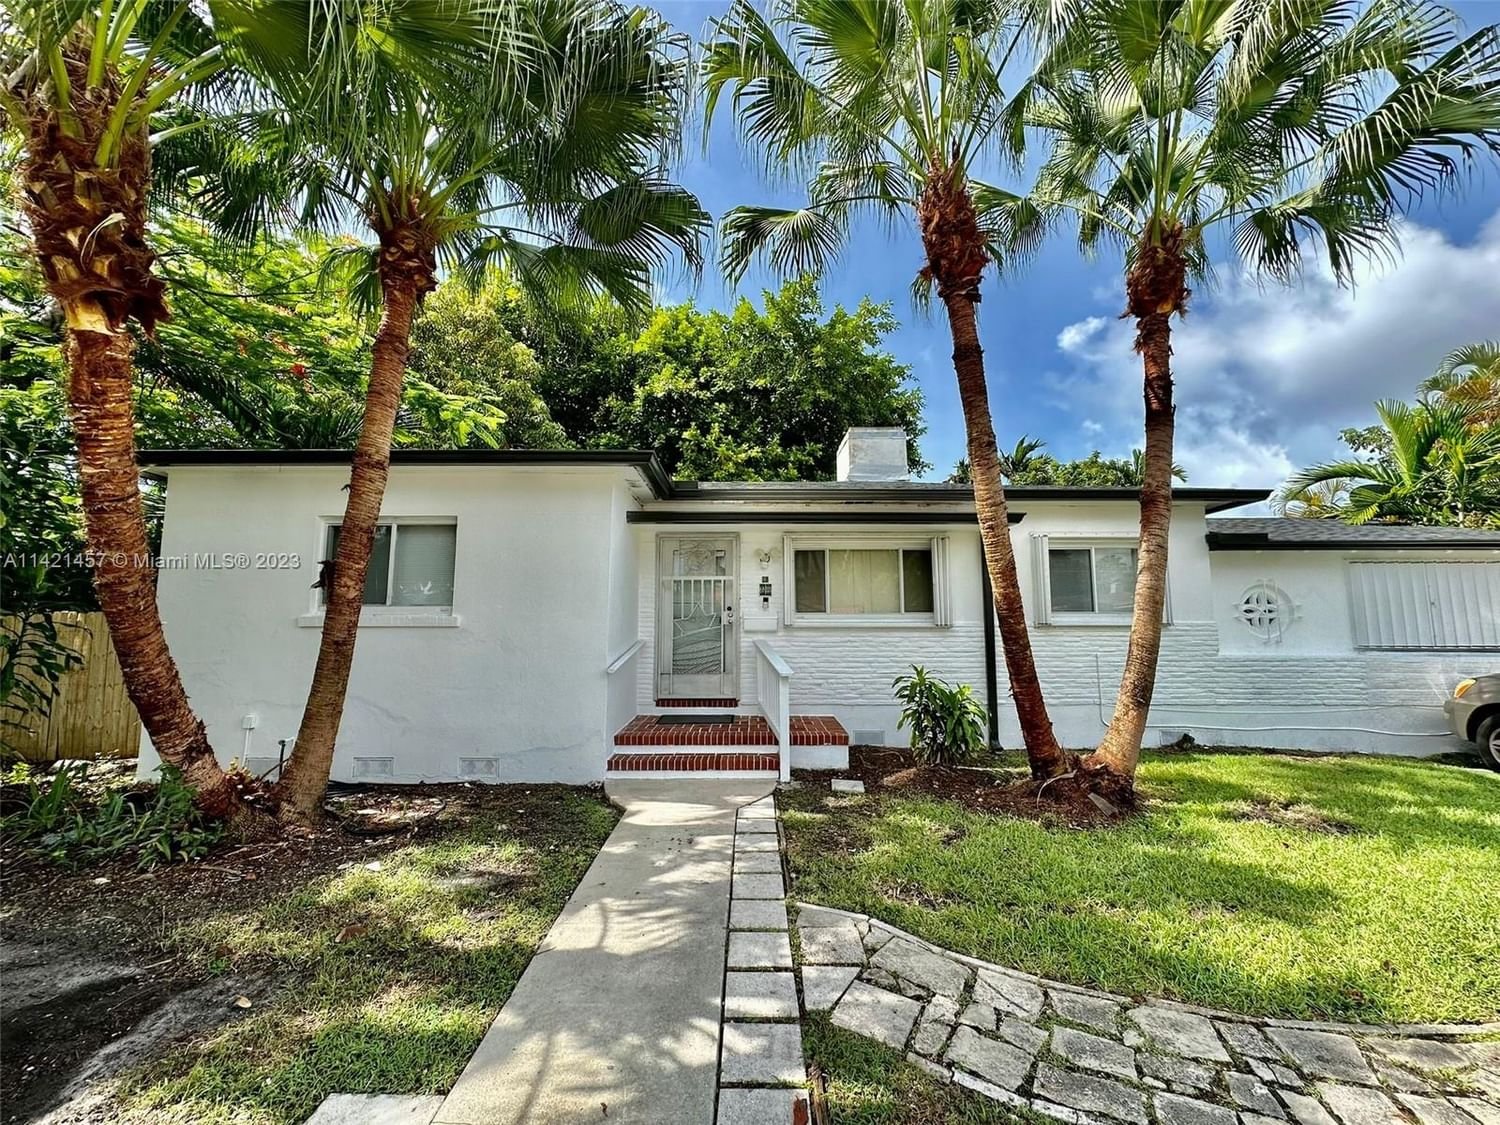 Real estate property located at 2200 24th St, Miami-Dade County, Miami, FL